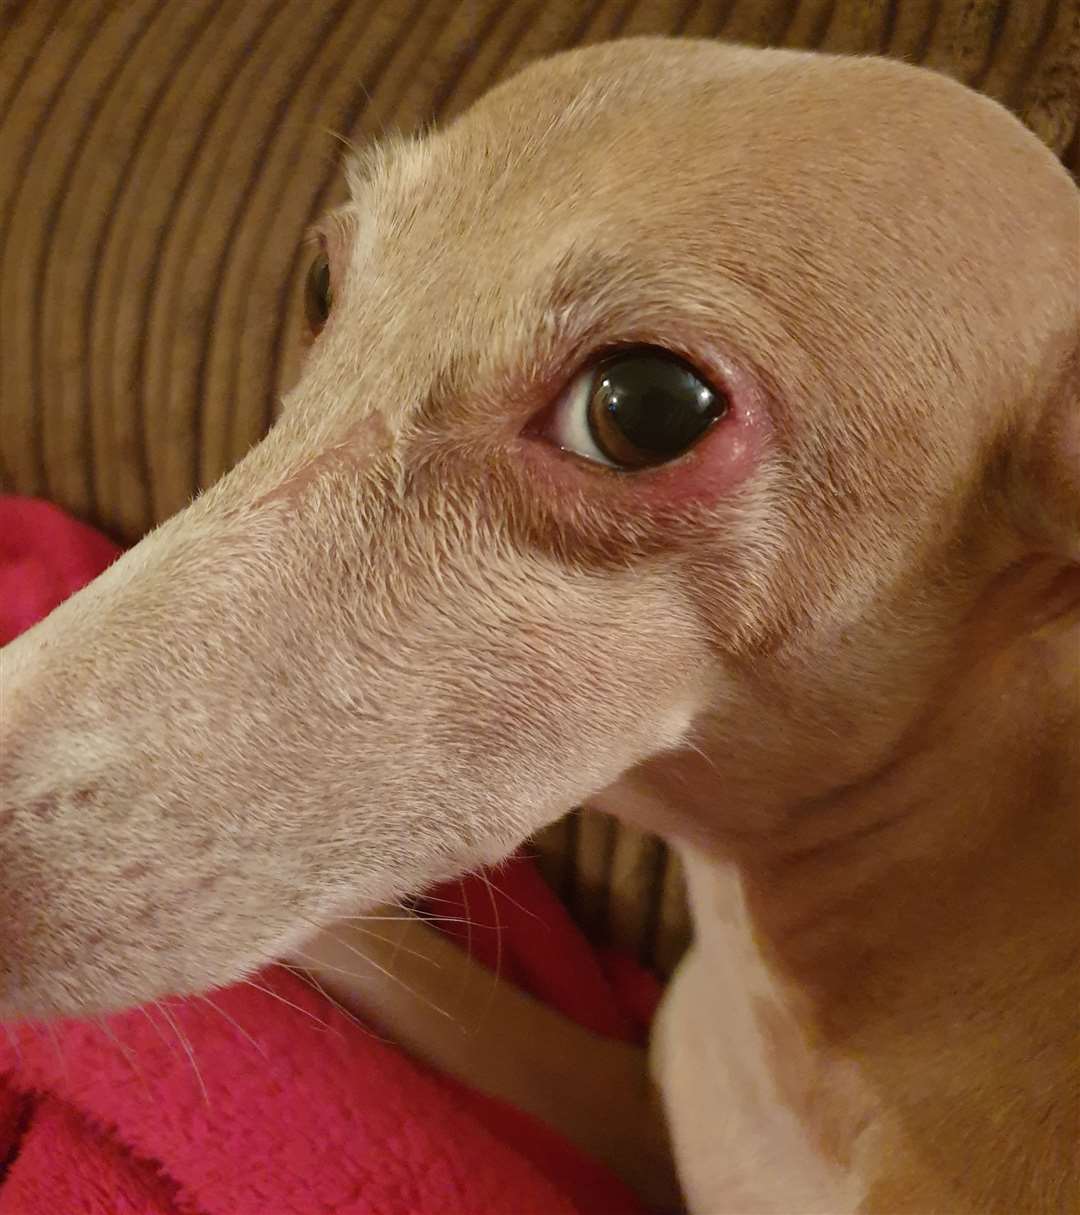 Lola, an Italian greyhound suffered swollen eyes